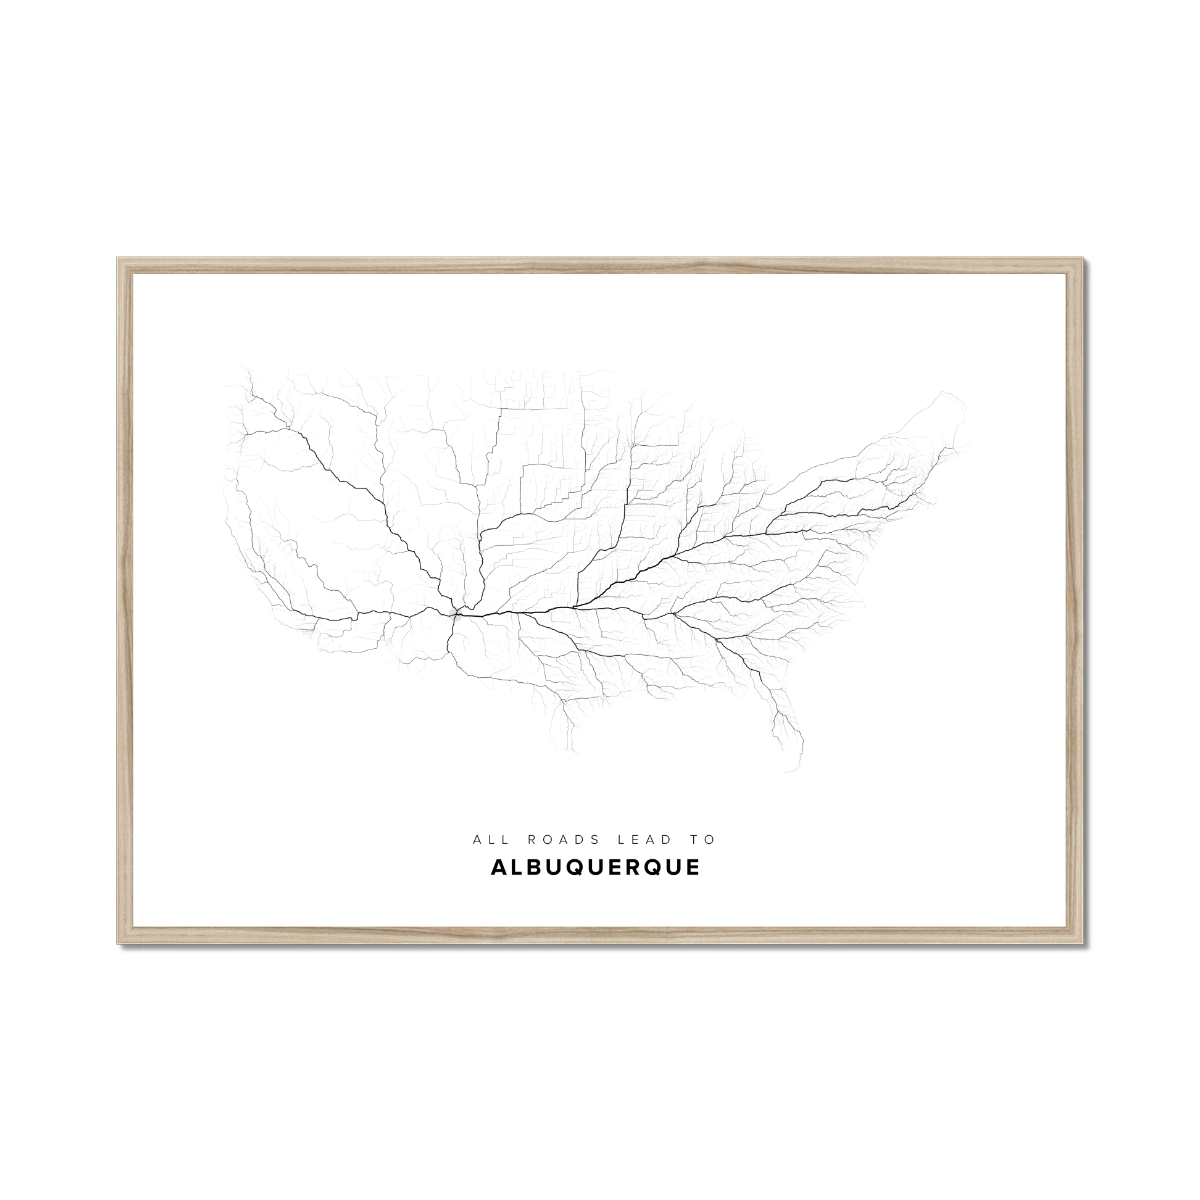 All roads lead to Albuquerque (United States of America) Fine Art Map Print